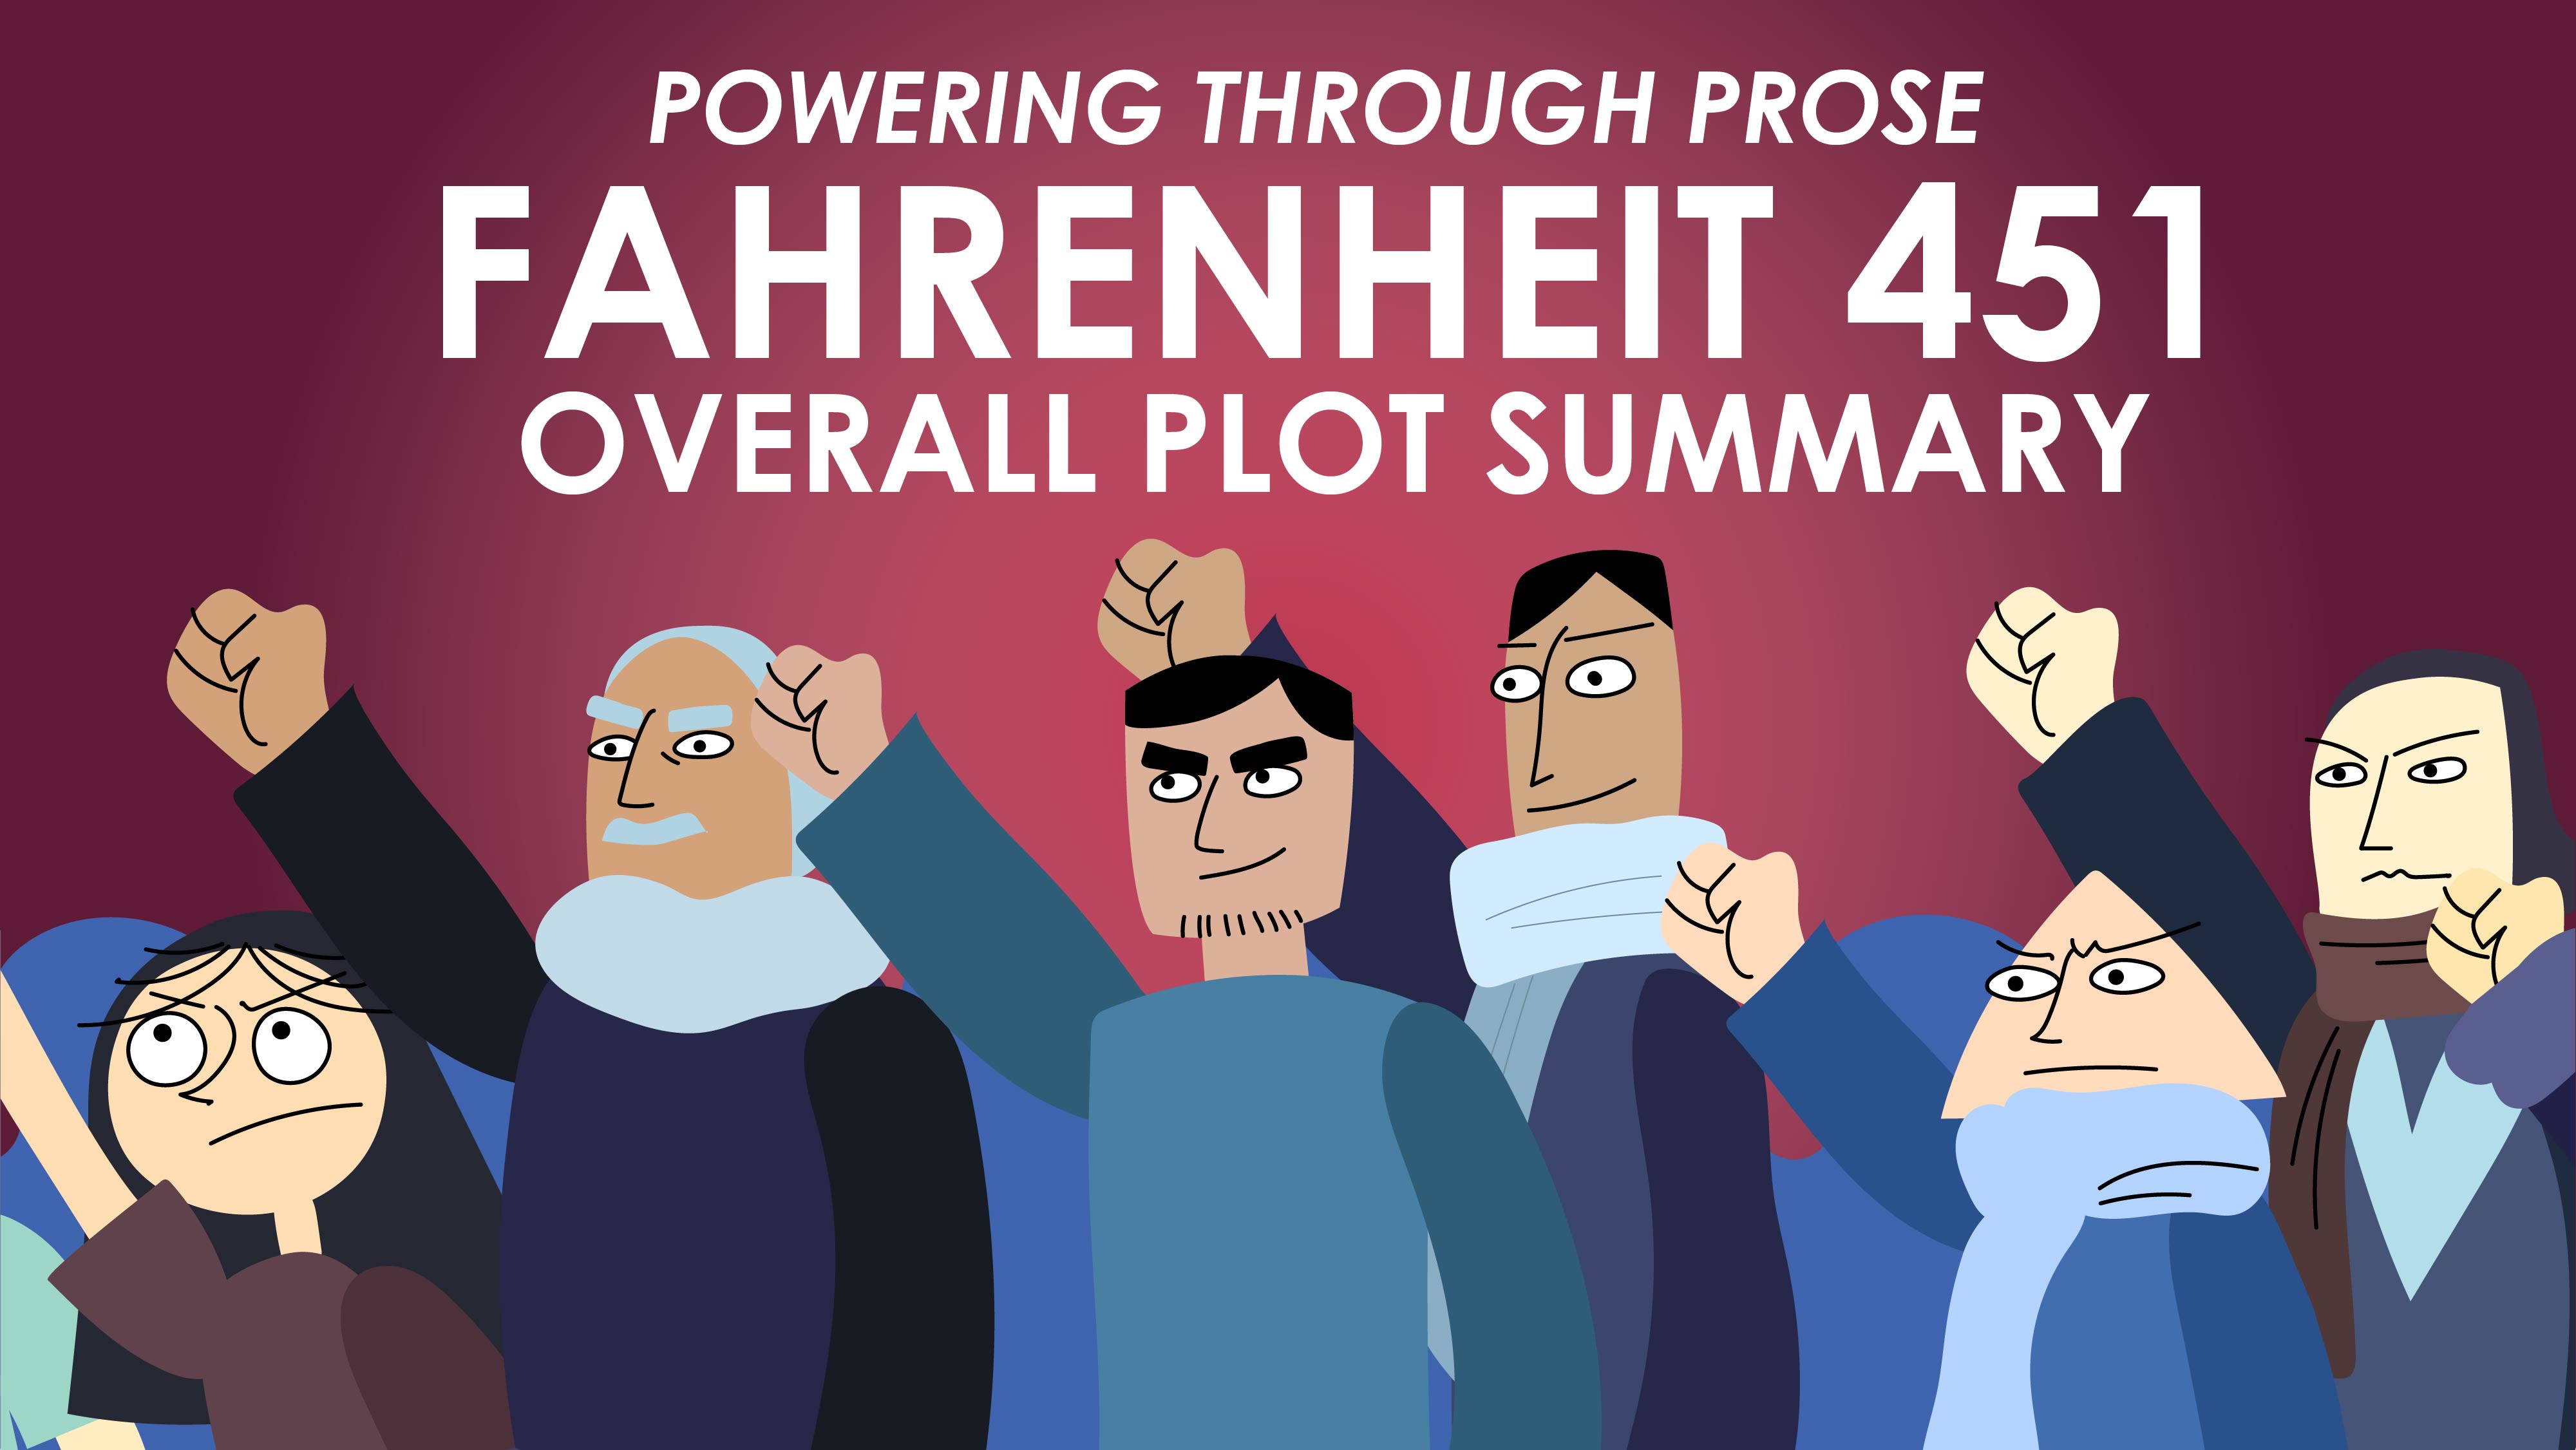 Fahrenheit 451 - Ray Bradbury - Overall Plot Summary - Powering Through Prose Series